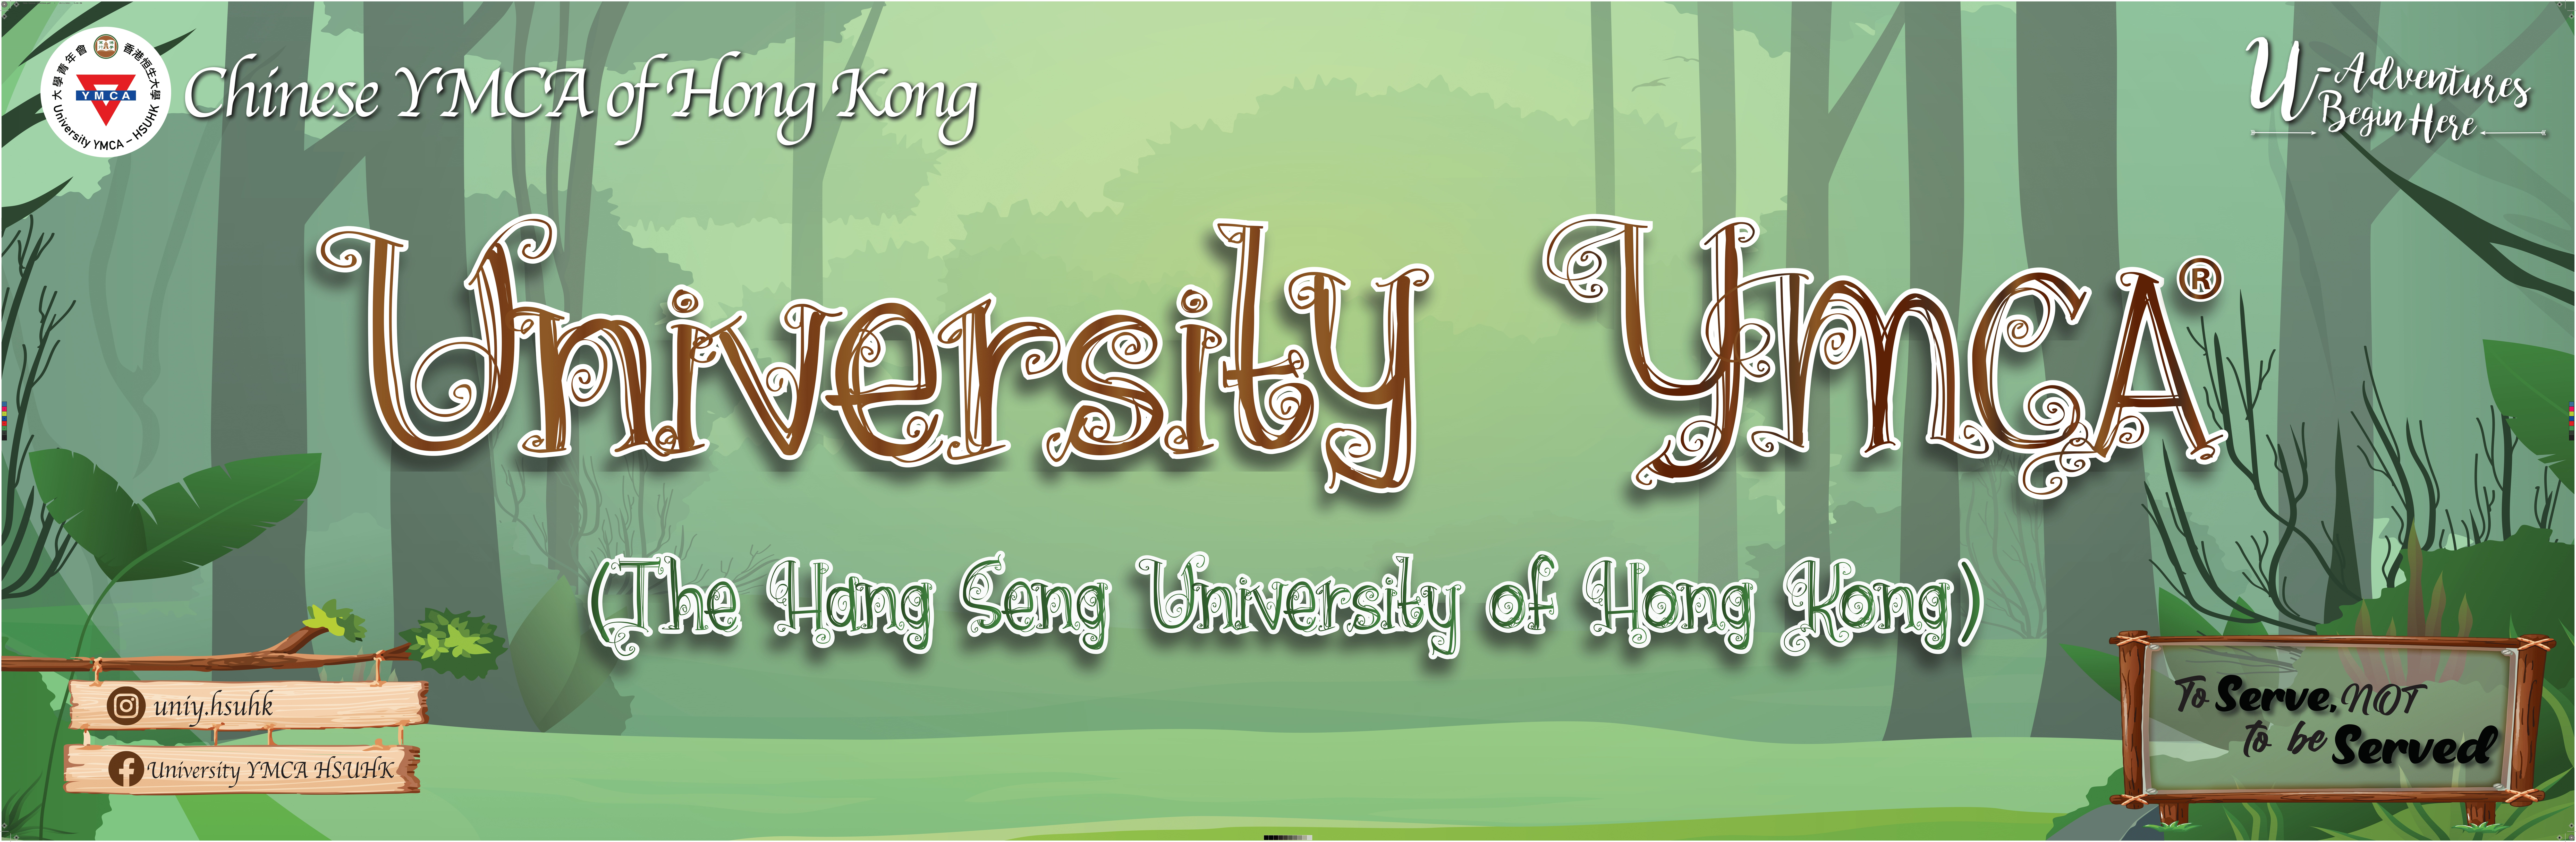 University YMCA (HSUHK) Download Banner